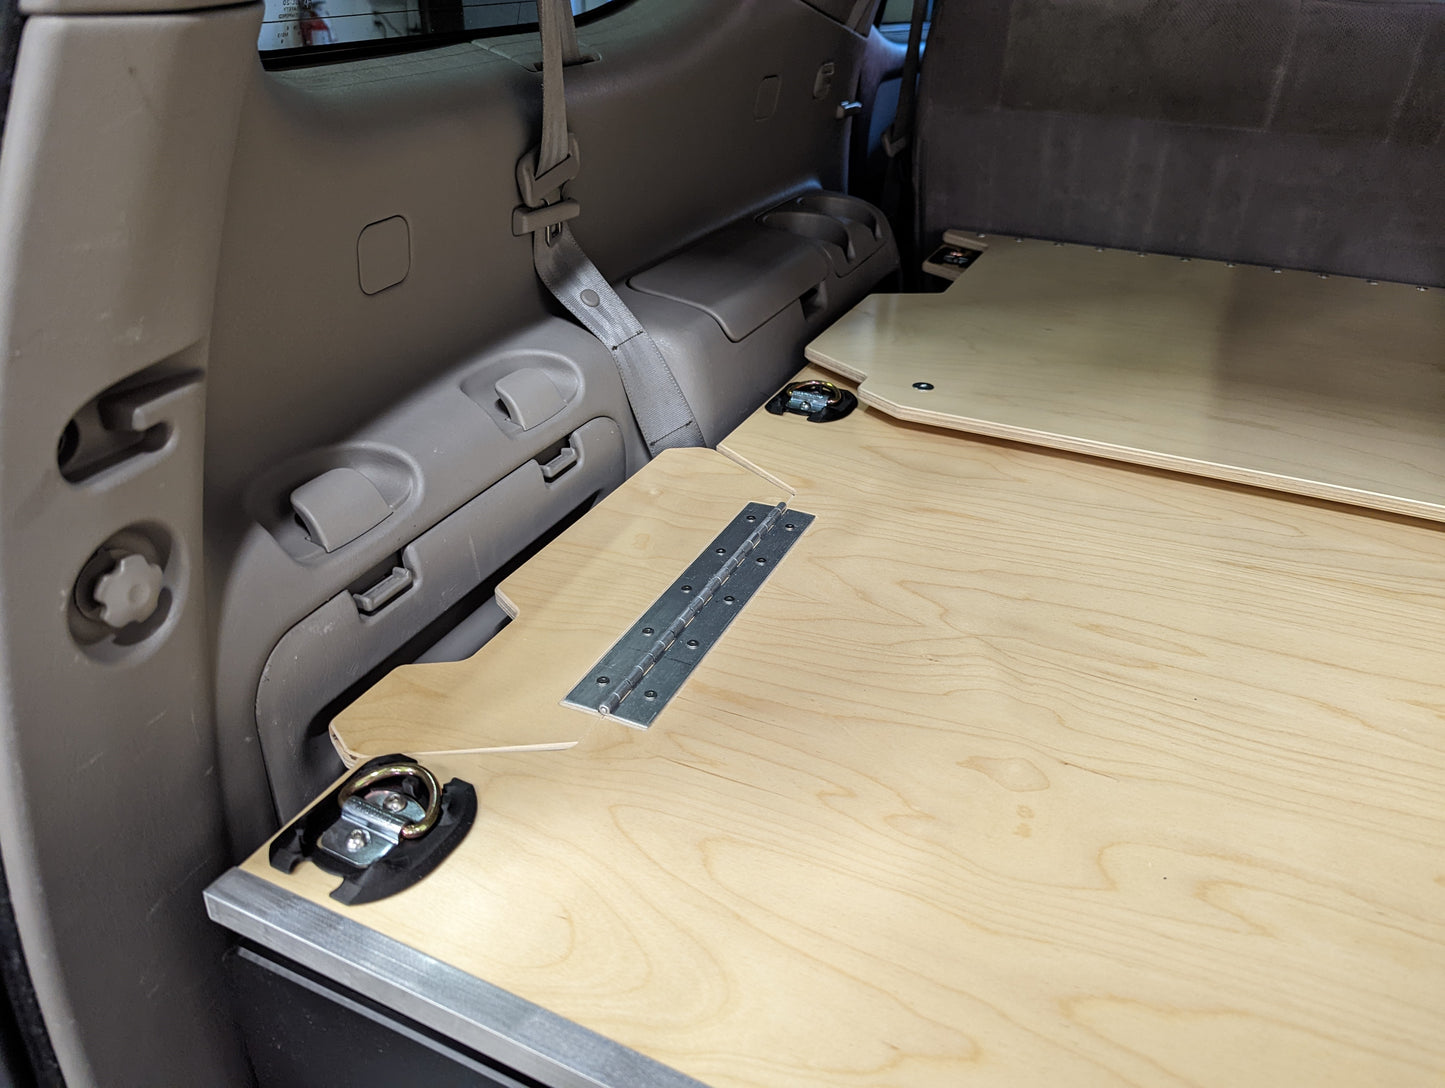 SS1 Toyota Sequoia (First Gen) Sleeping Platform / Drawers